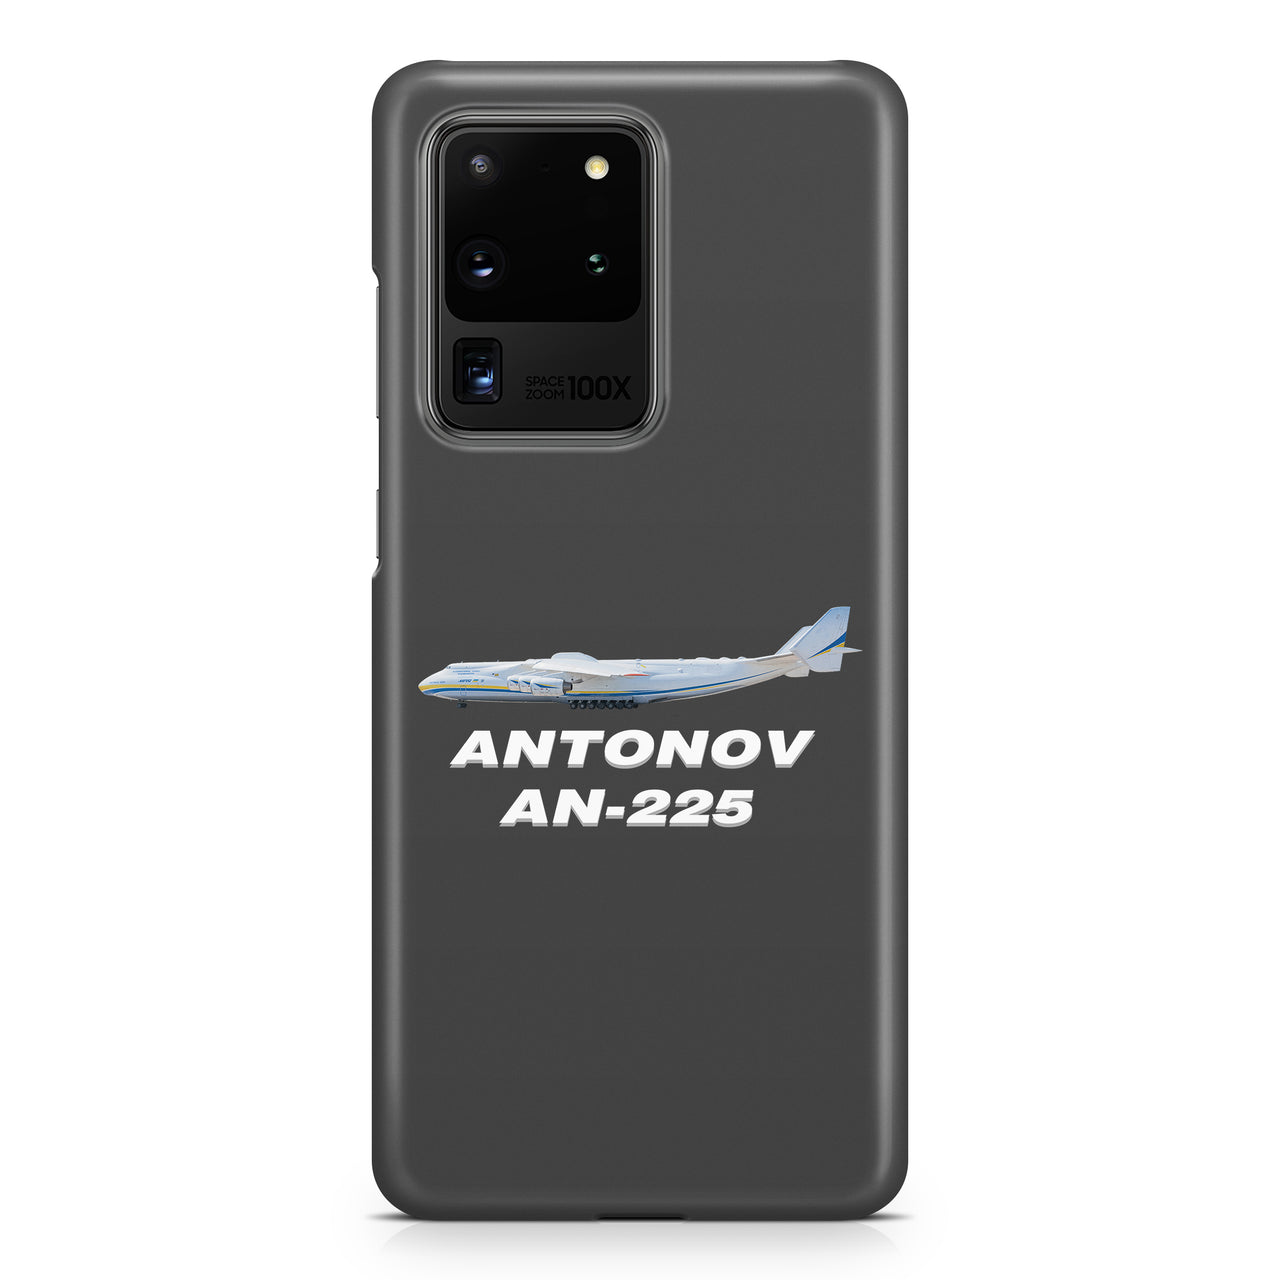 The Antonov AN-225 Samsung S & Note Cases